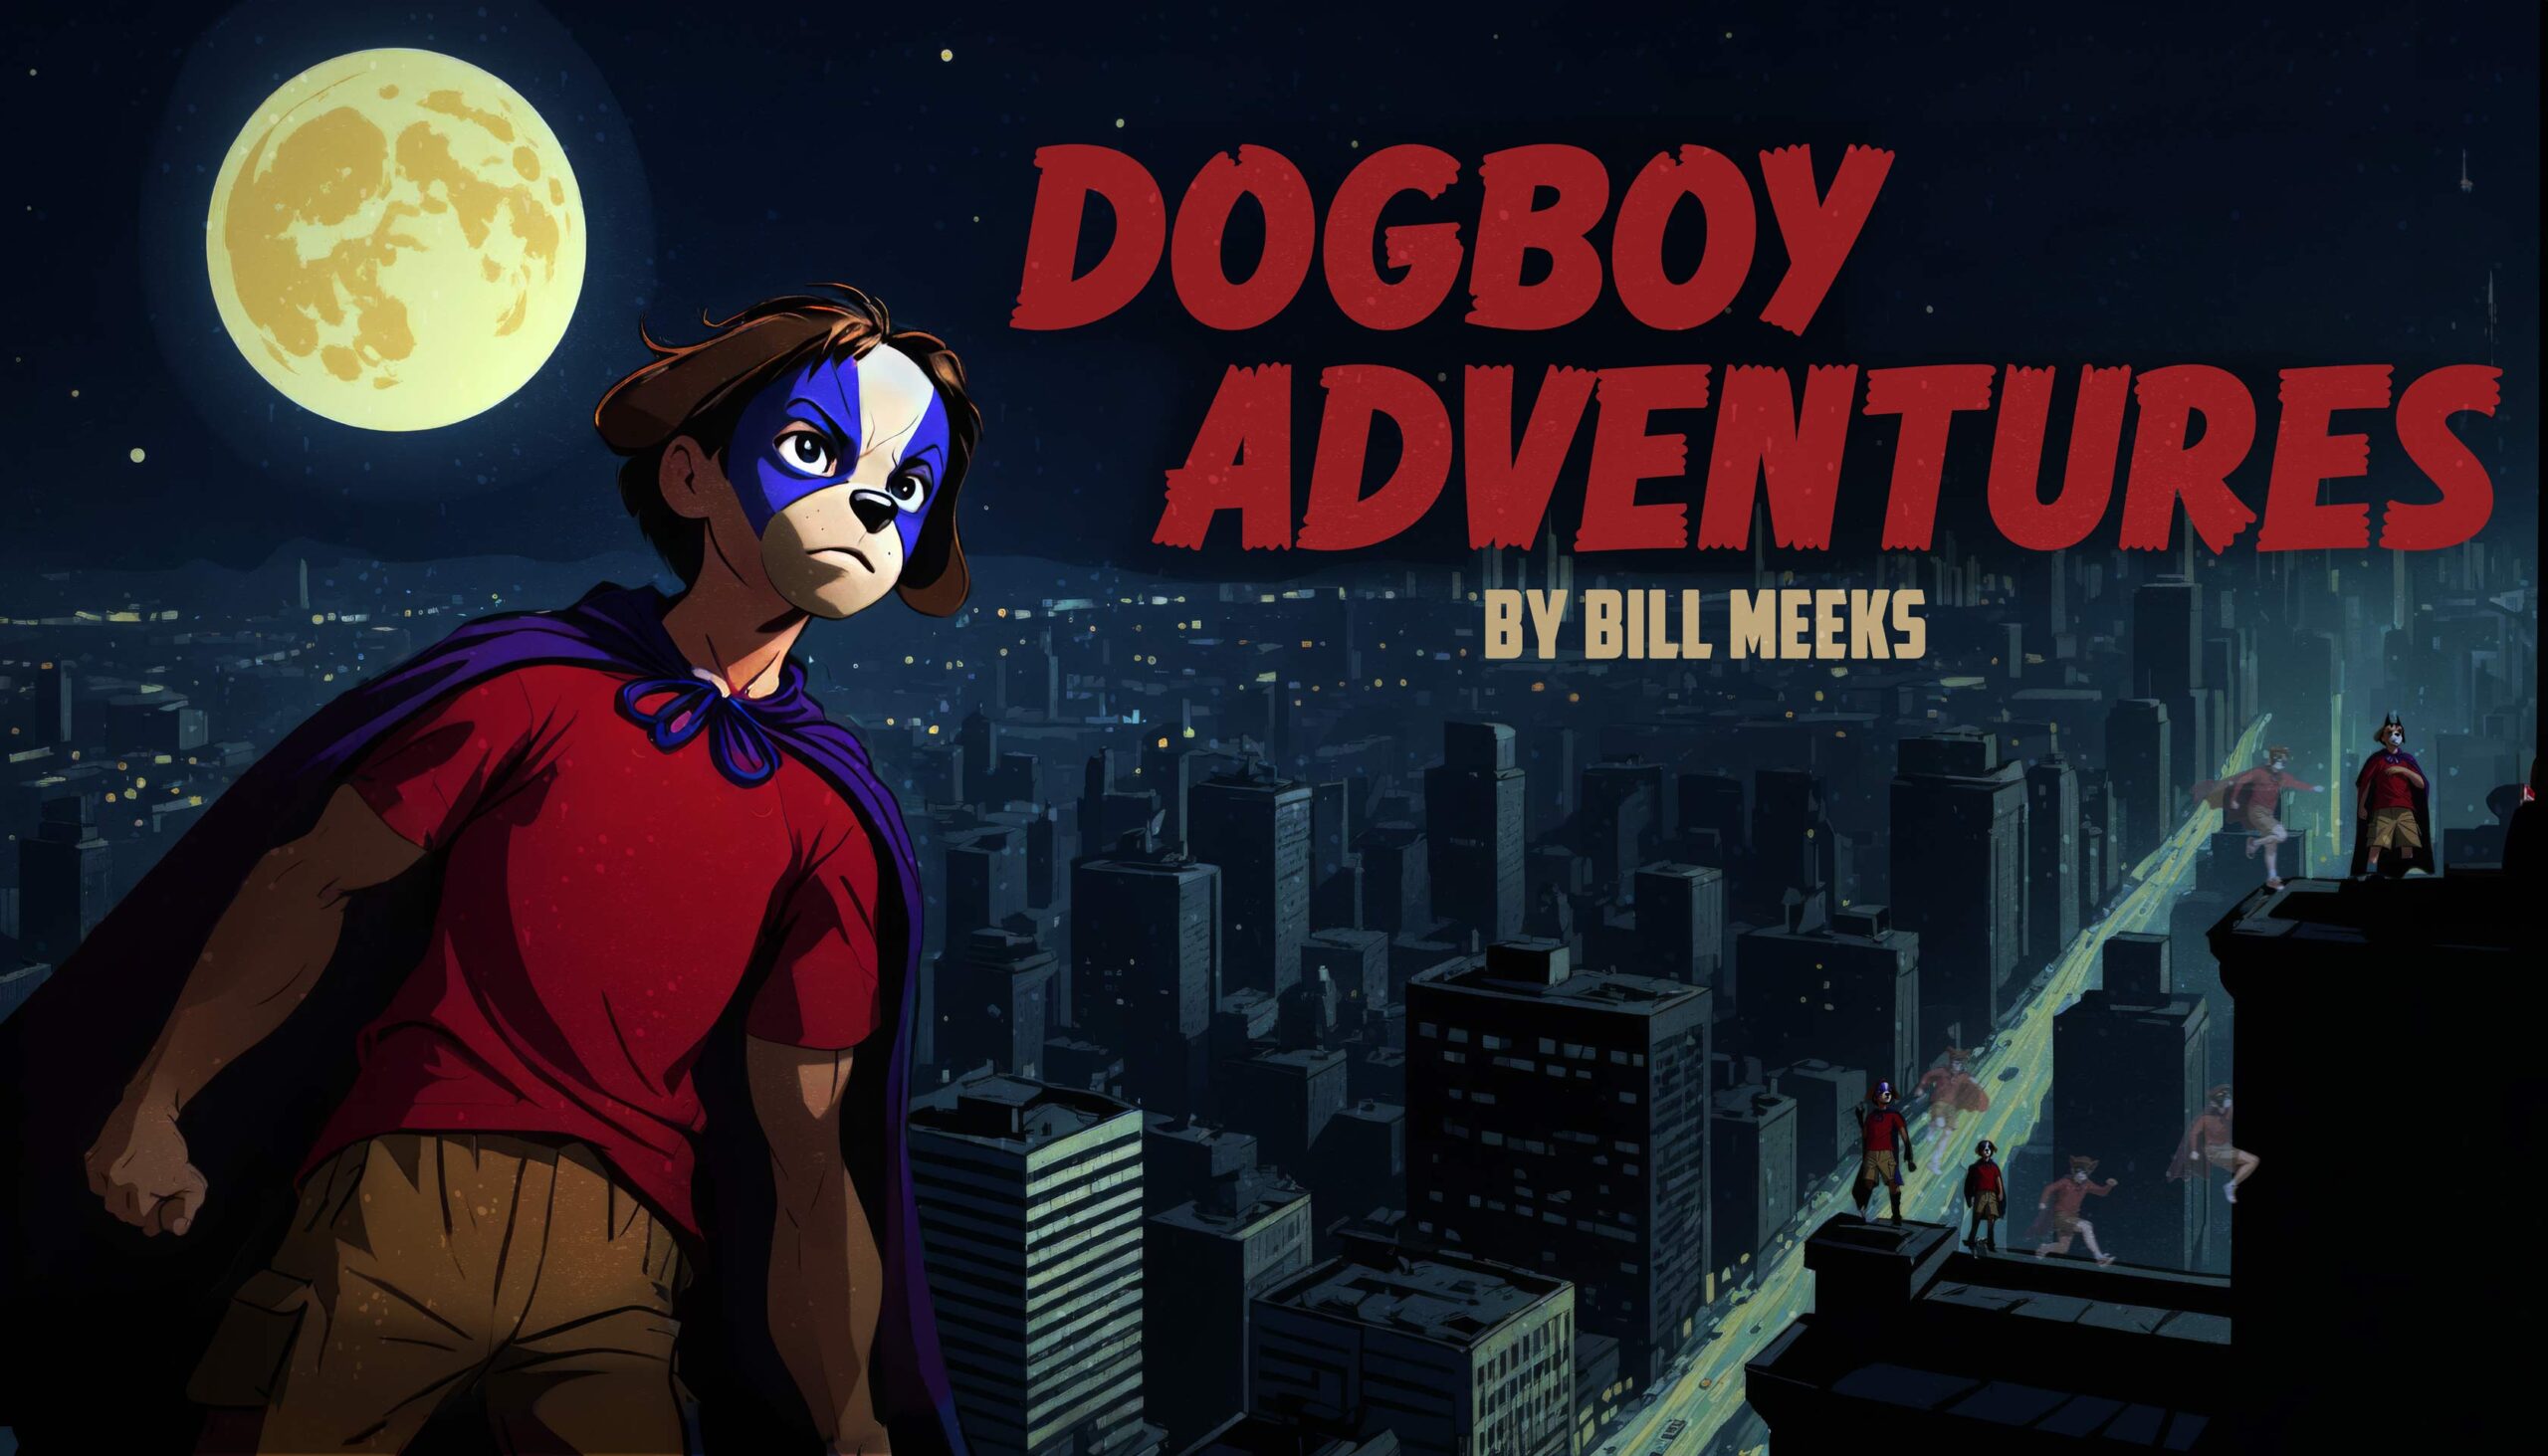 Dogboy Adventures by Bill Meeks